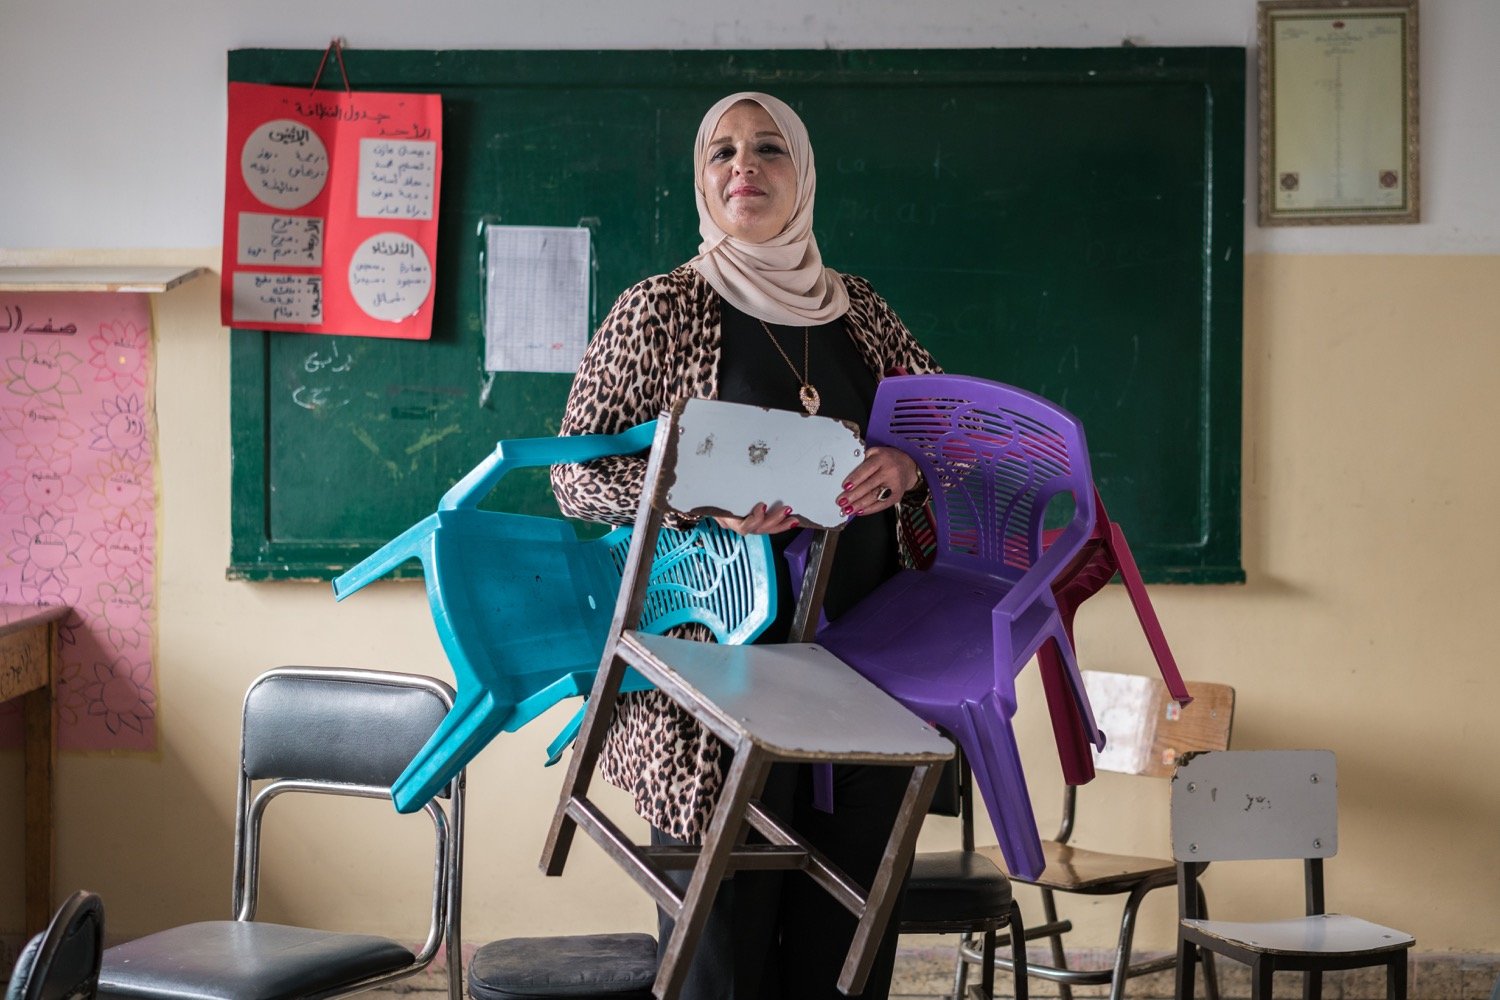  AMMAN, JORDAN - OCTOBER 1, 2015: 
Maha al Ashqar is the principal of Khawla Bint Tha’laba Primary Girls School in a suburb of Amman Jordan. The school, which has 356 students, hosts around 65 Syrian students—many of whom have fled violence and destr